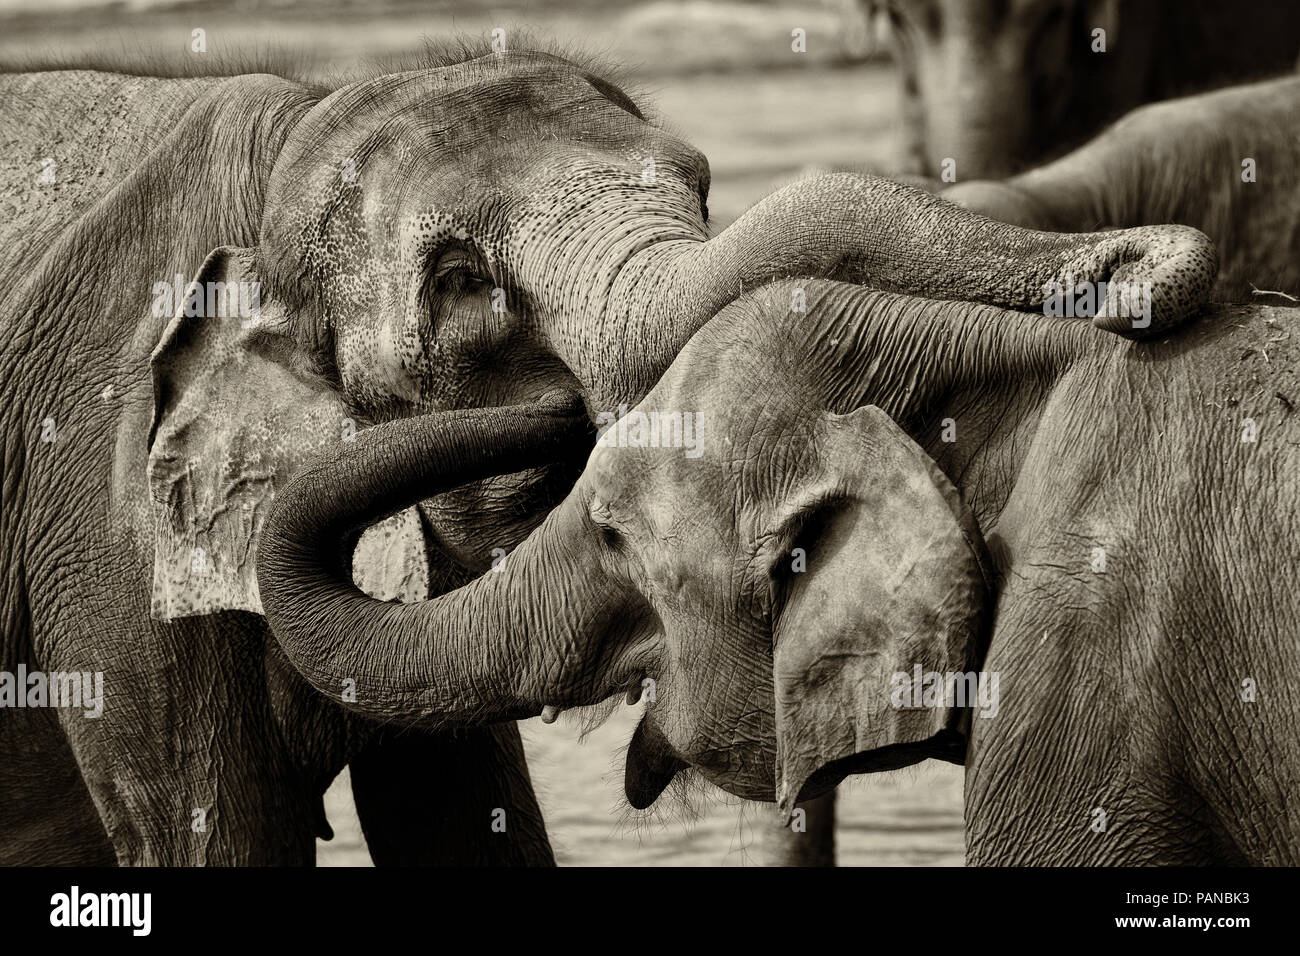 Sri Lankan Elefant - Elephas Maximus Maximus, Sri Lanka, iconic Säugetier aus Asien. Stockfoto